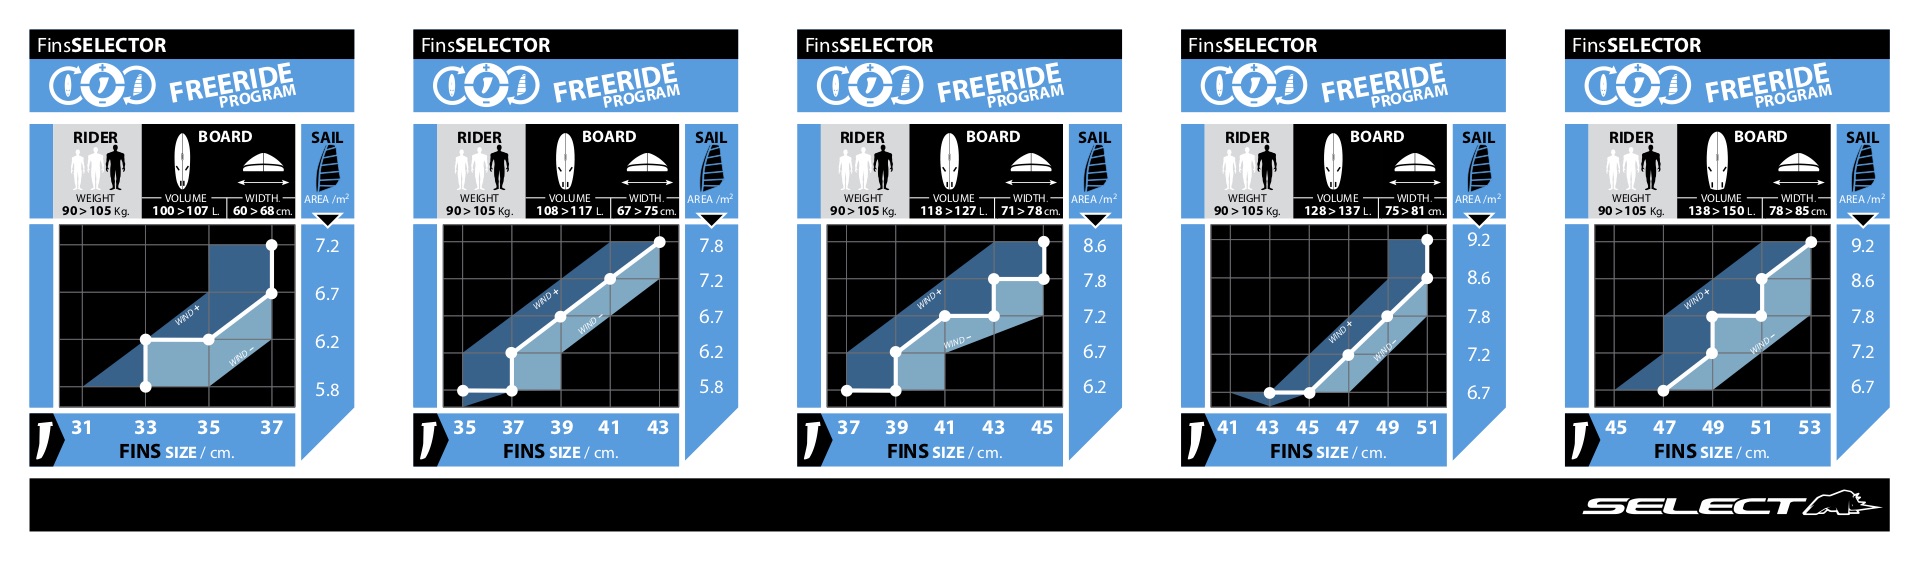 Select Fins 2019 _ Freeride Fin Selectors 3.jpg